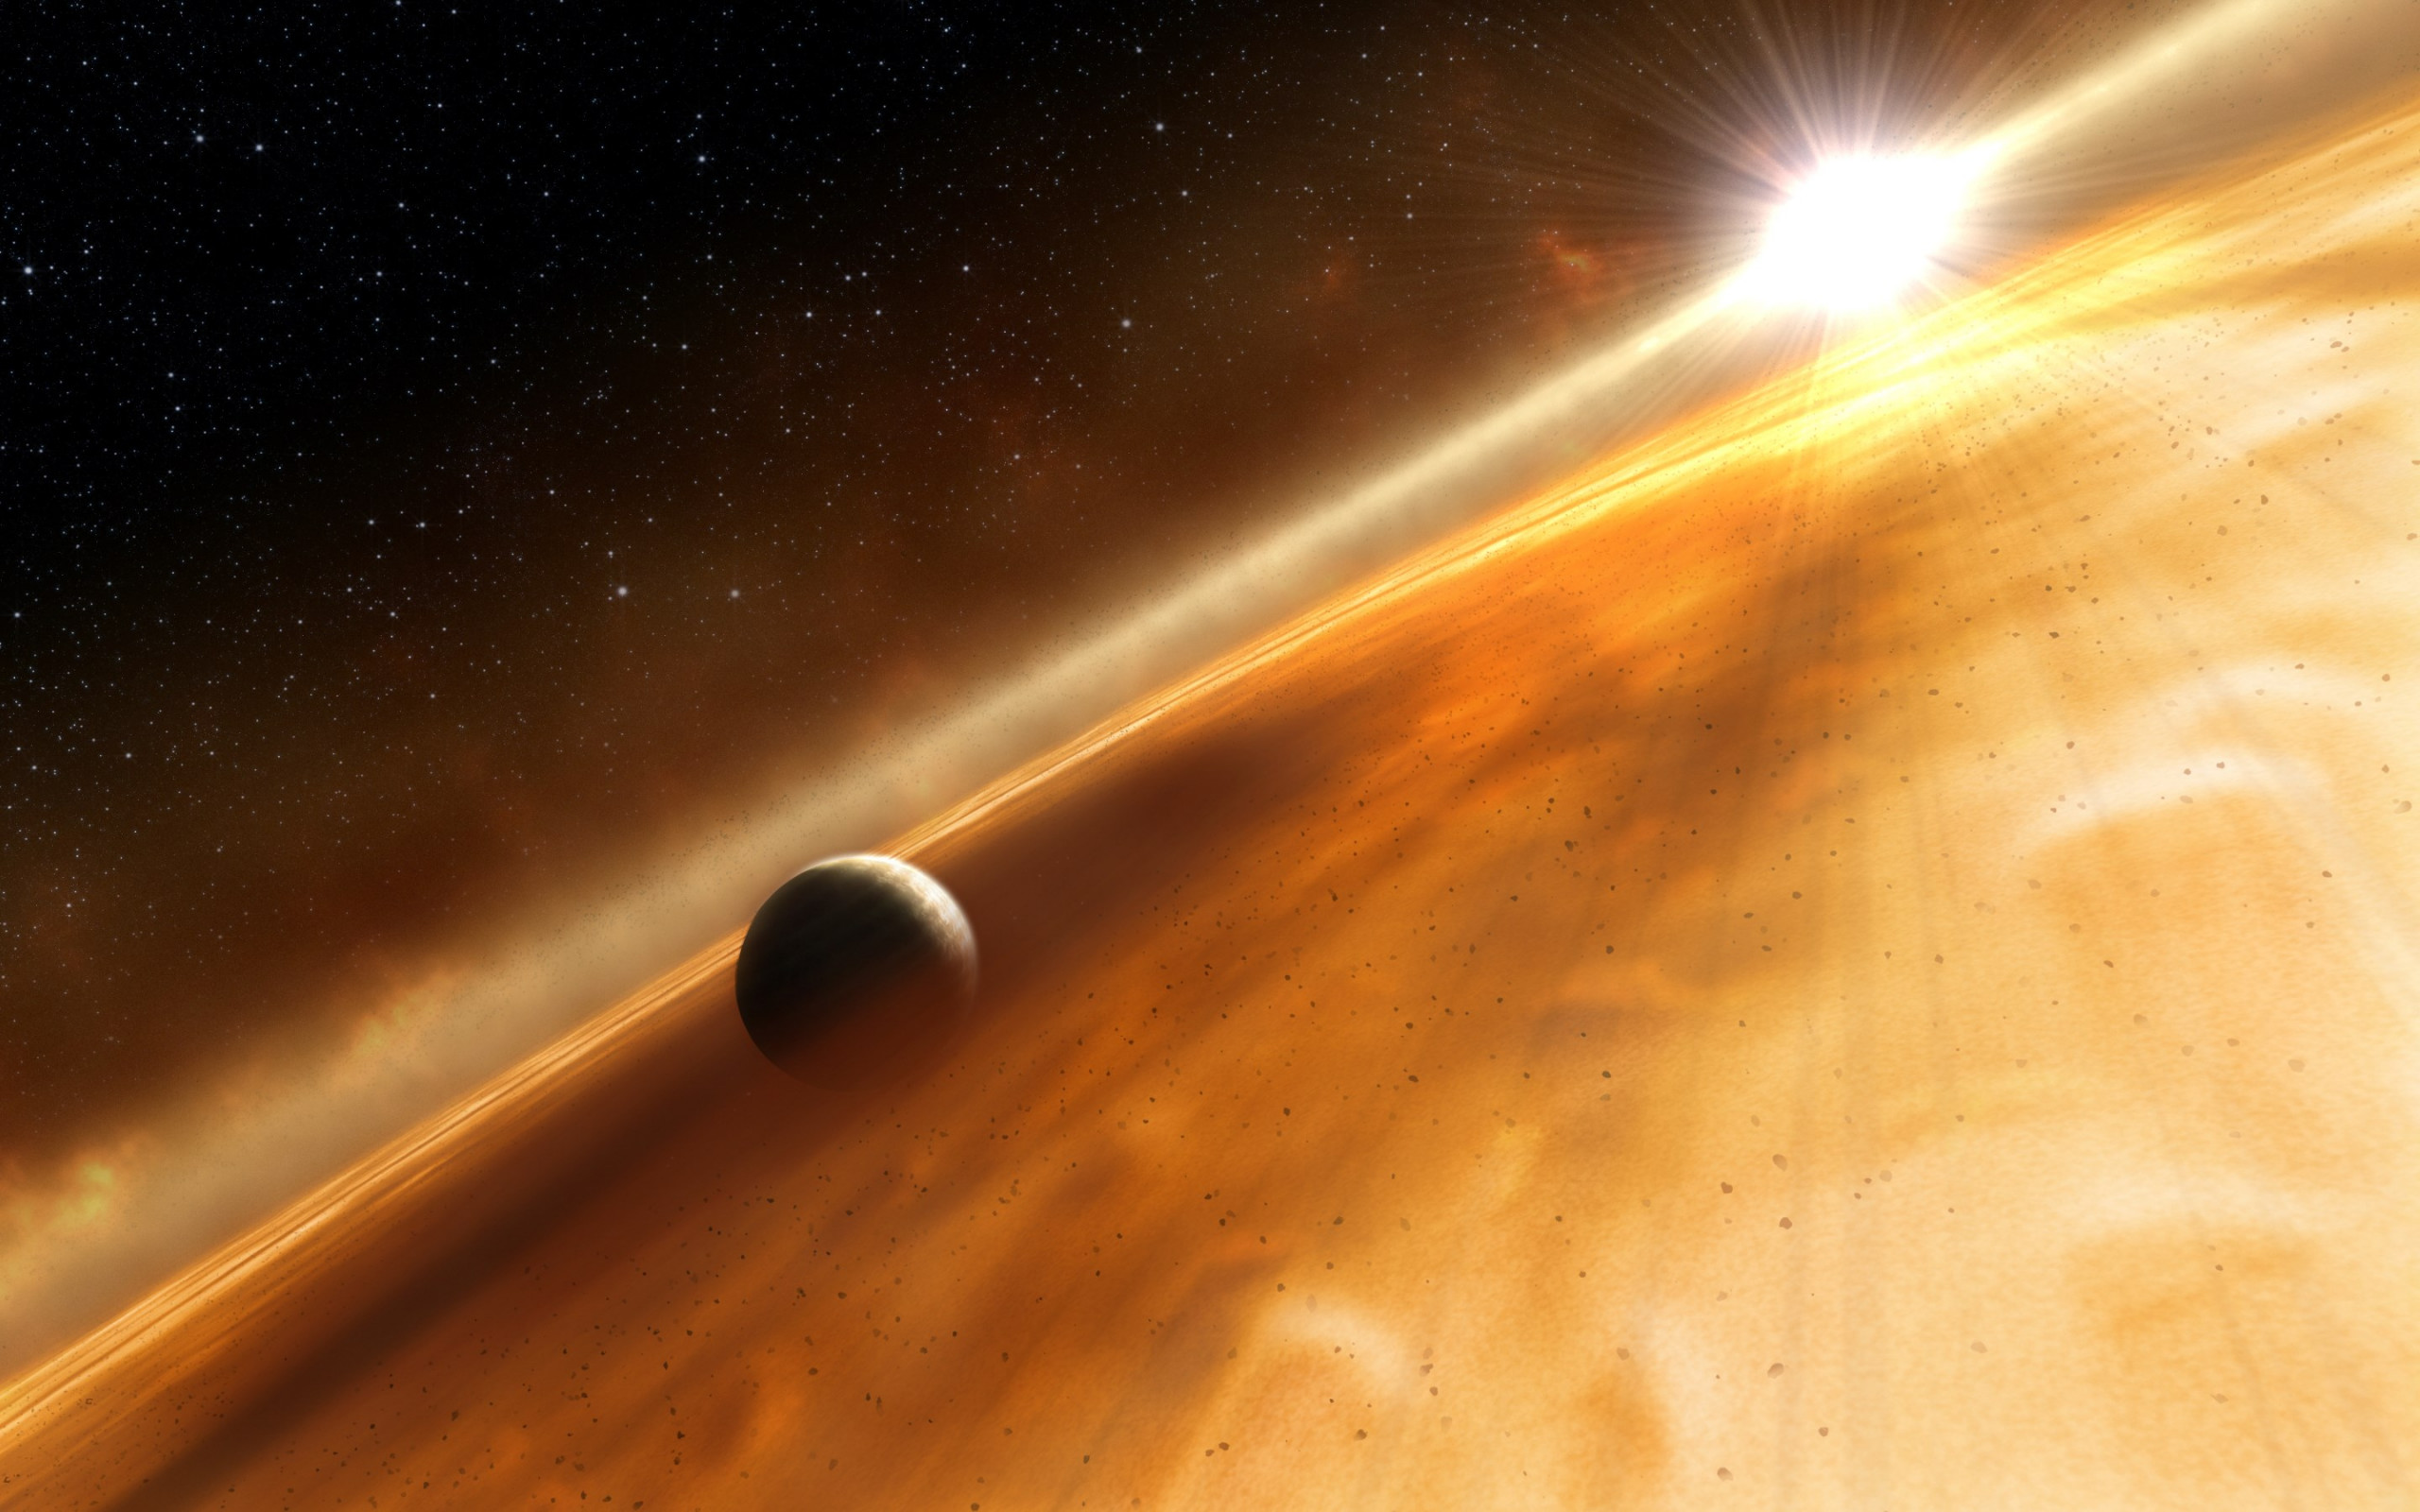 Fomalhaut b, orbiting its sun wallpaper 2560x1600